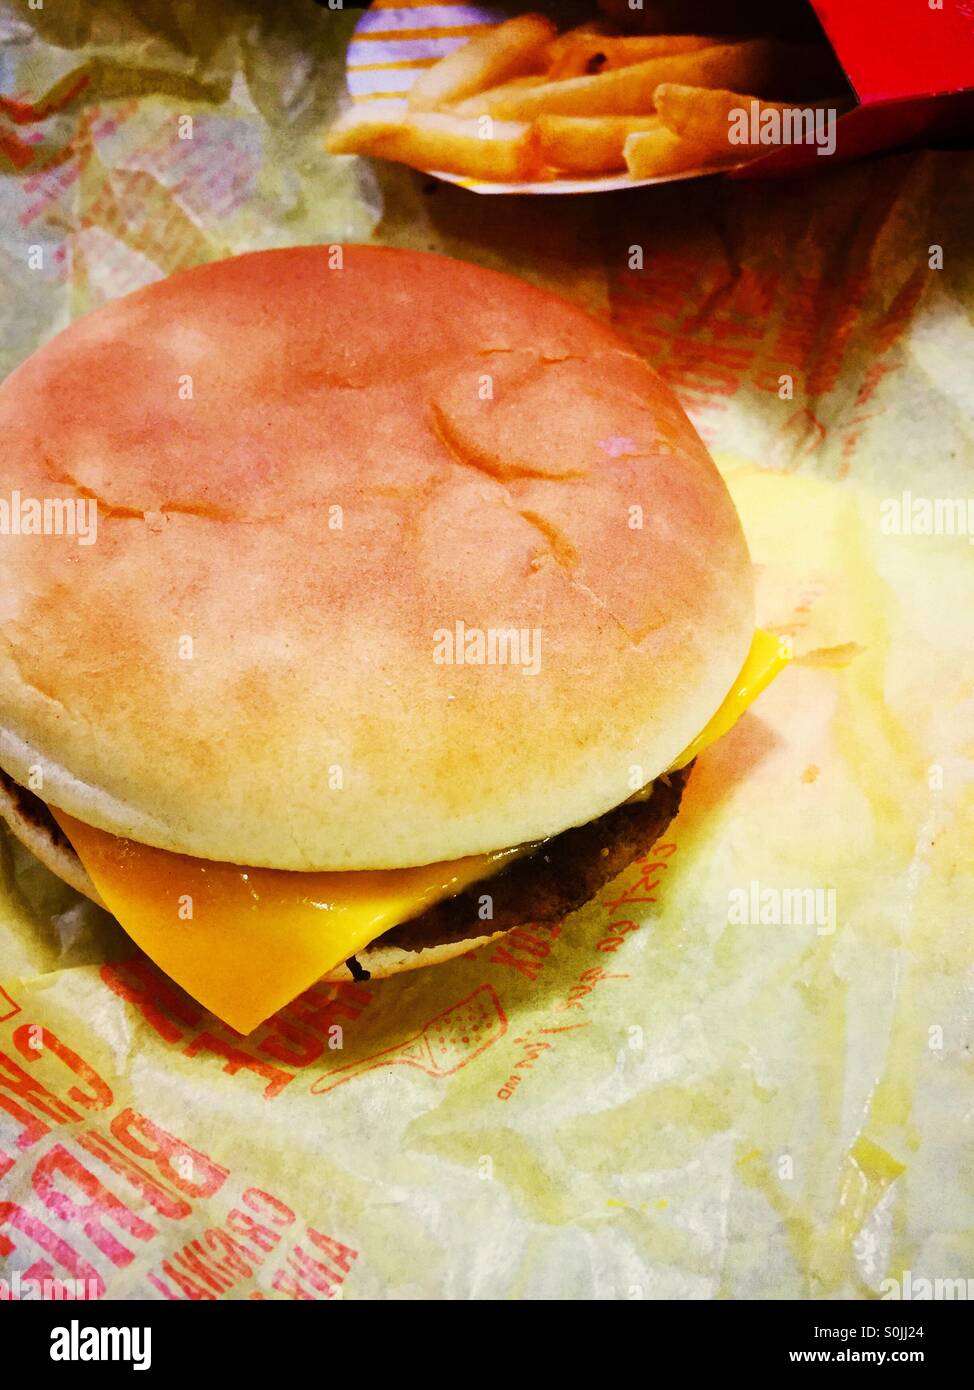 Cheeseburger and fries. Stock Photo